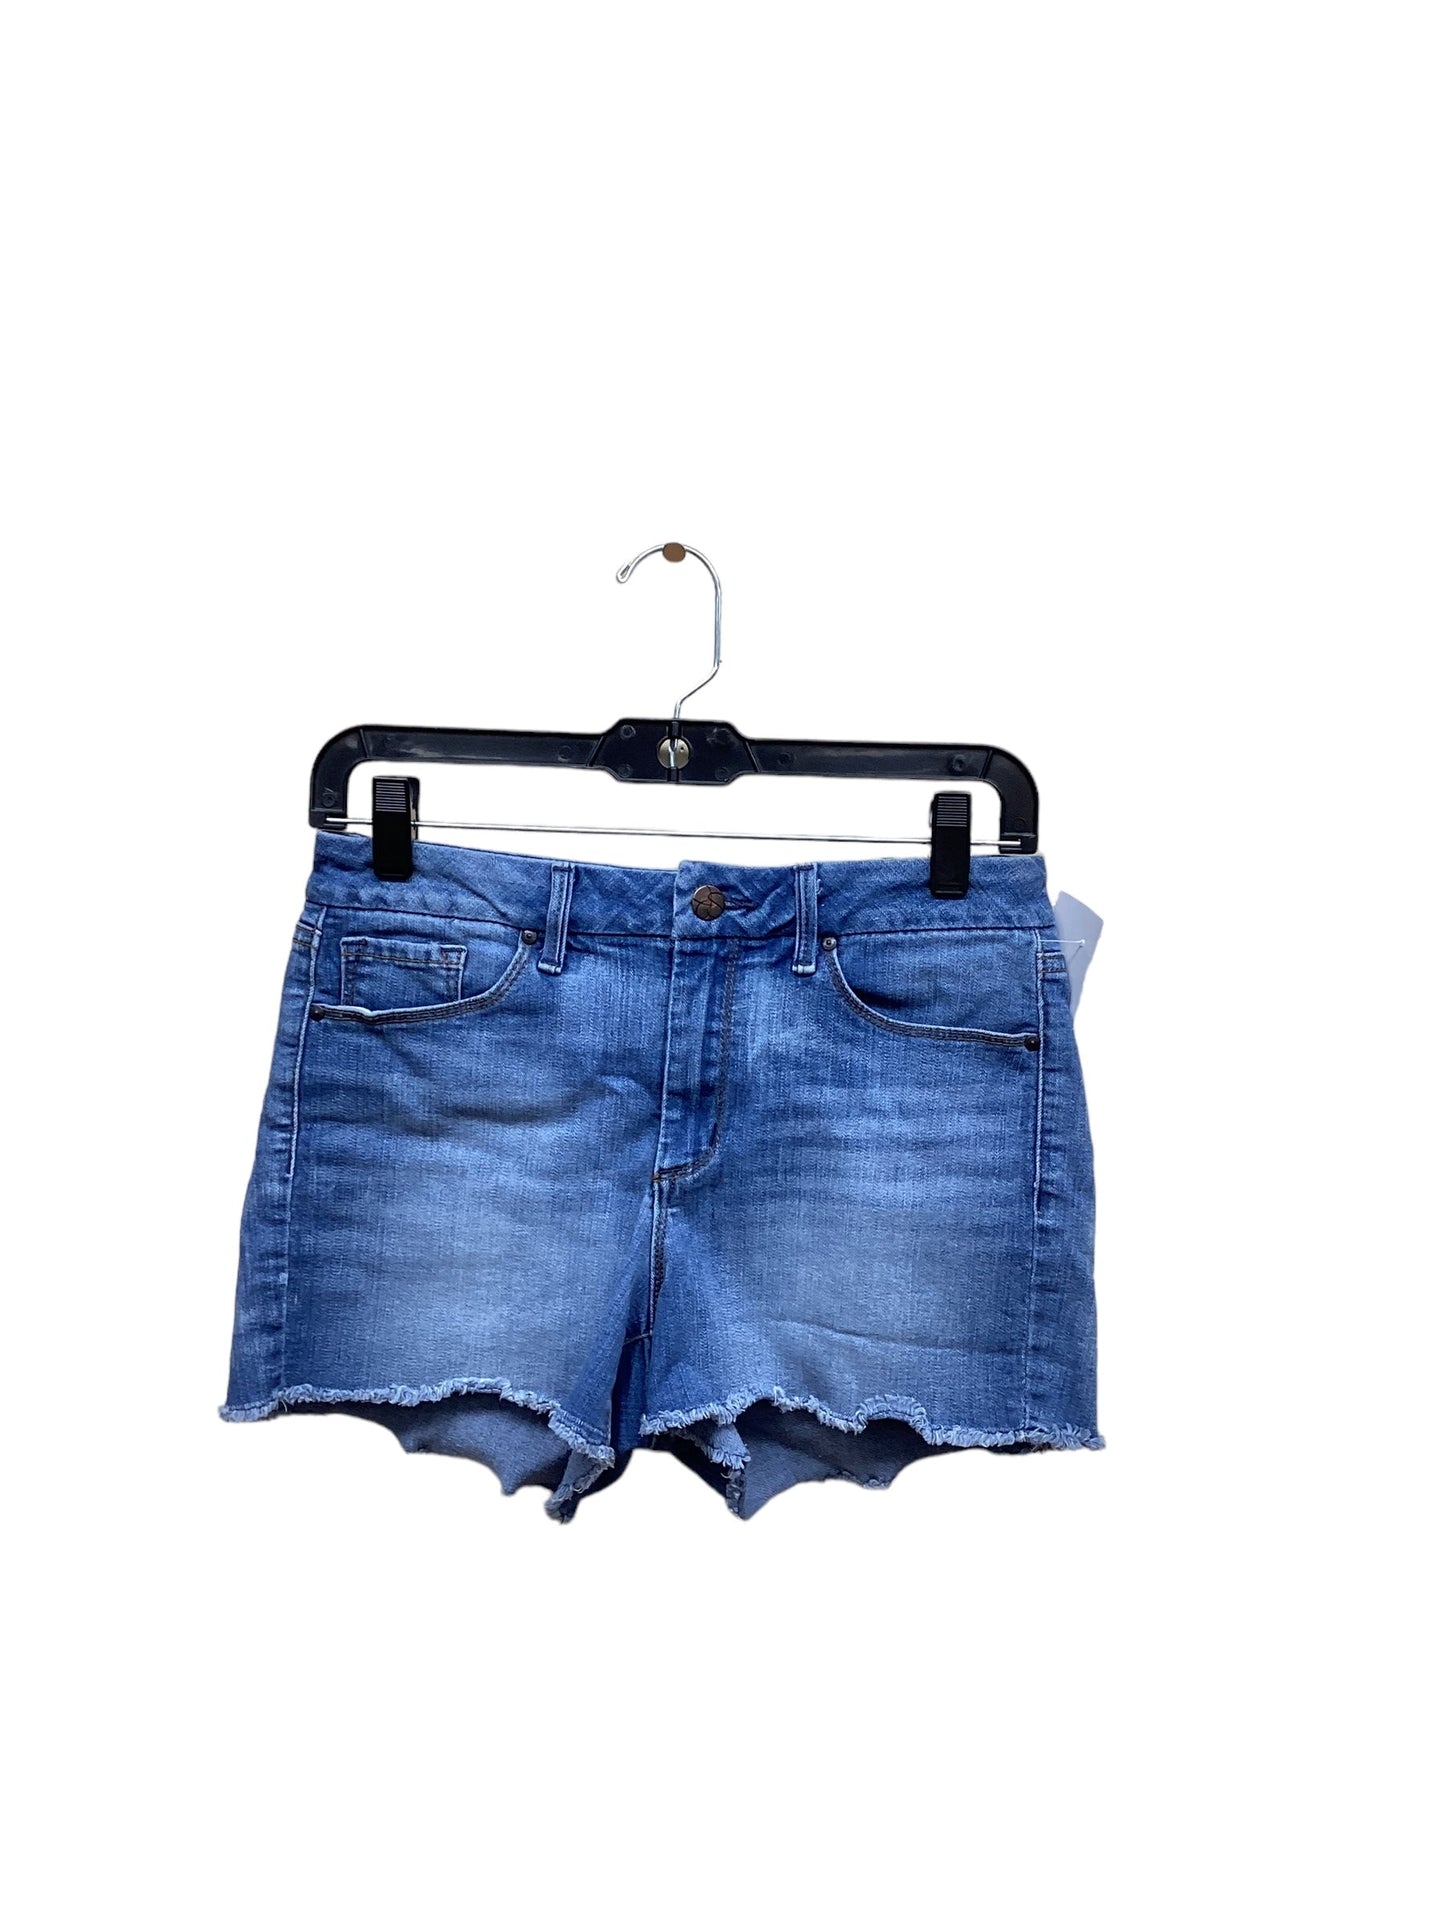 Blue Denim Shorts Jessica Simpson, Size 4